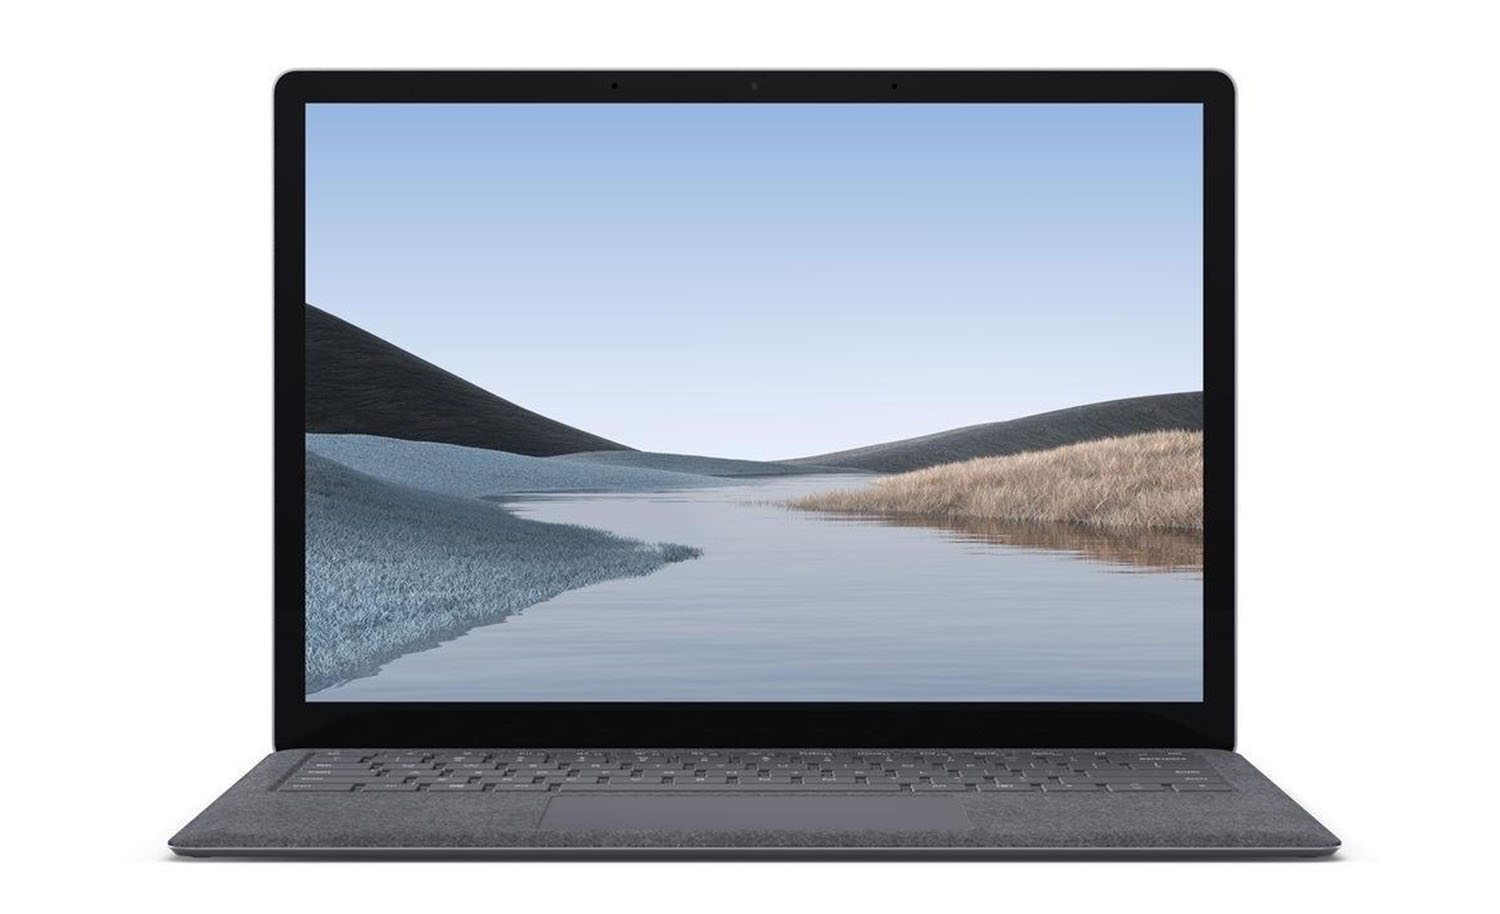 Microsoft Surface Laptop 3 Intel Core i7 10th Gen 16GB RAM 512GB SSD Touchscreen Windows 10 Pro